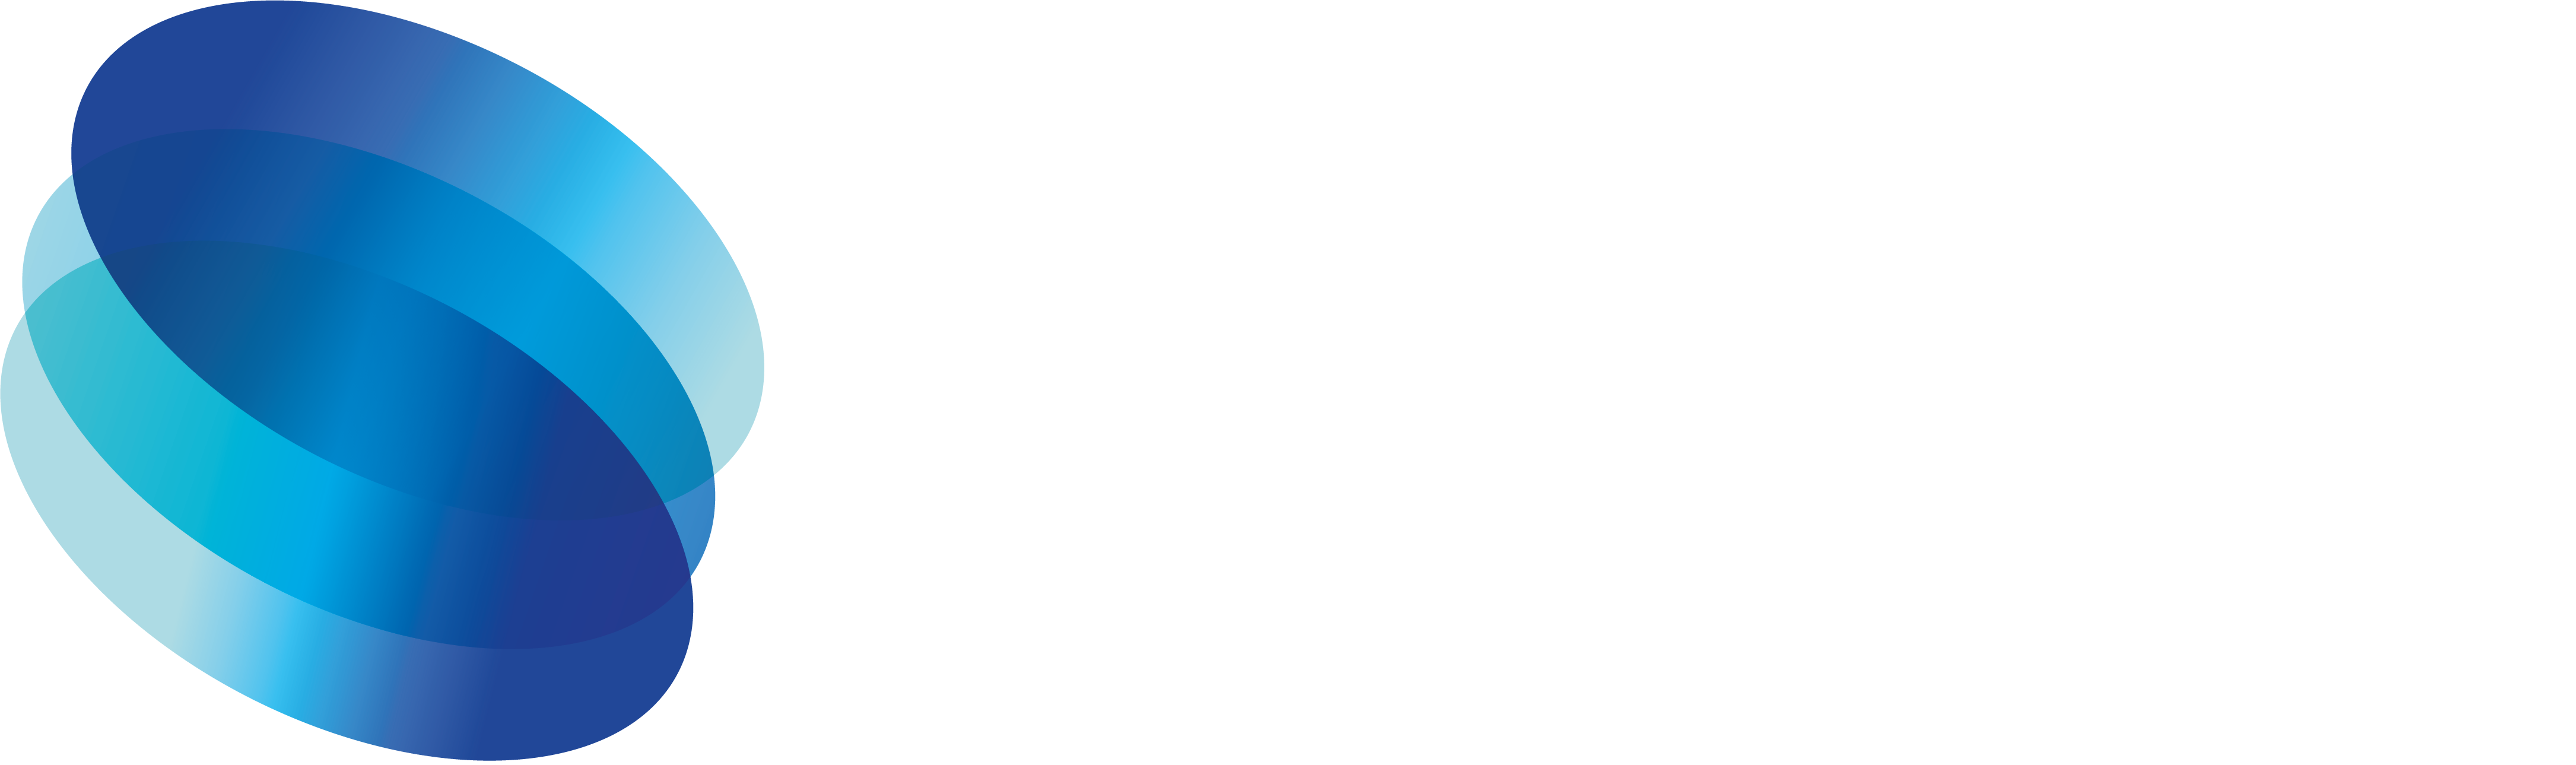 HW231204 LEAP HR Life Sciences Searchlight logo W